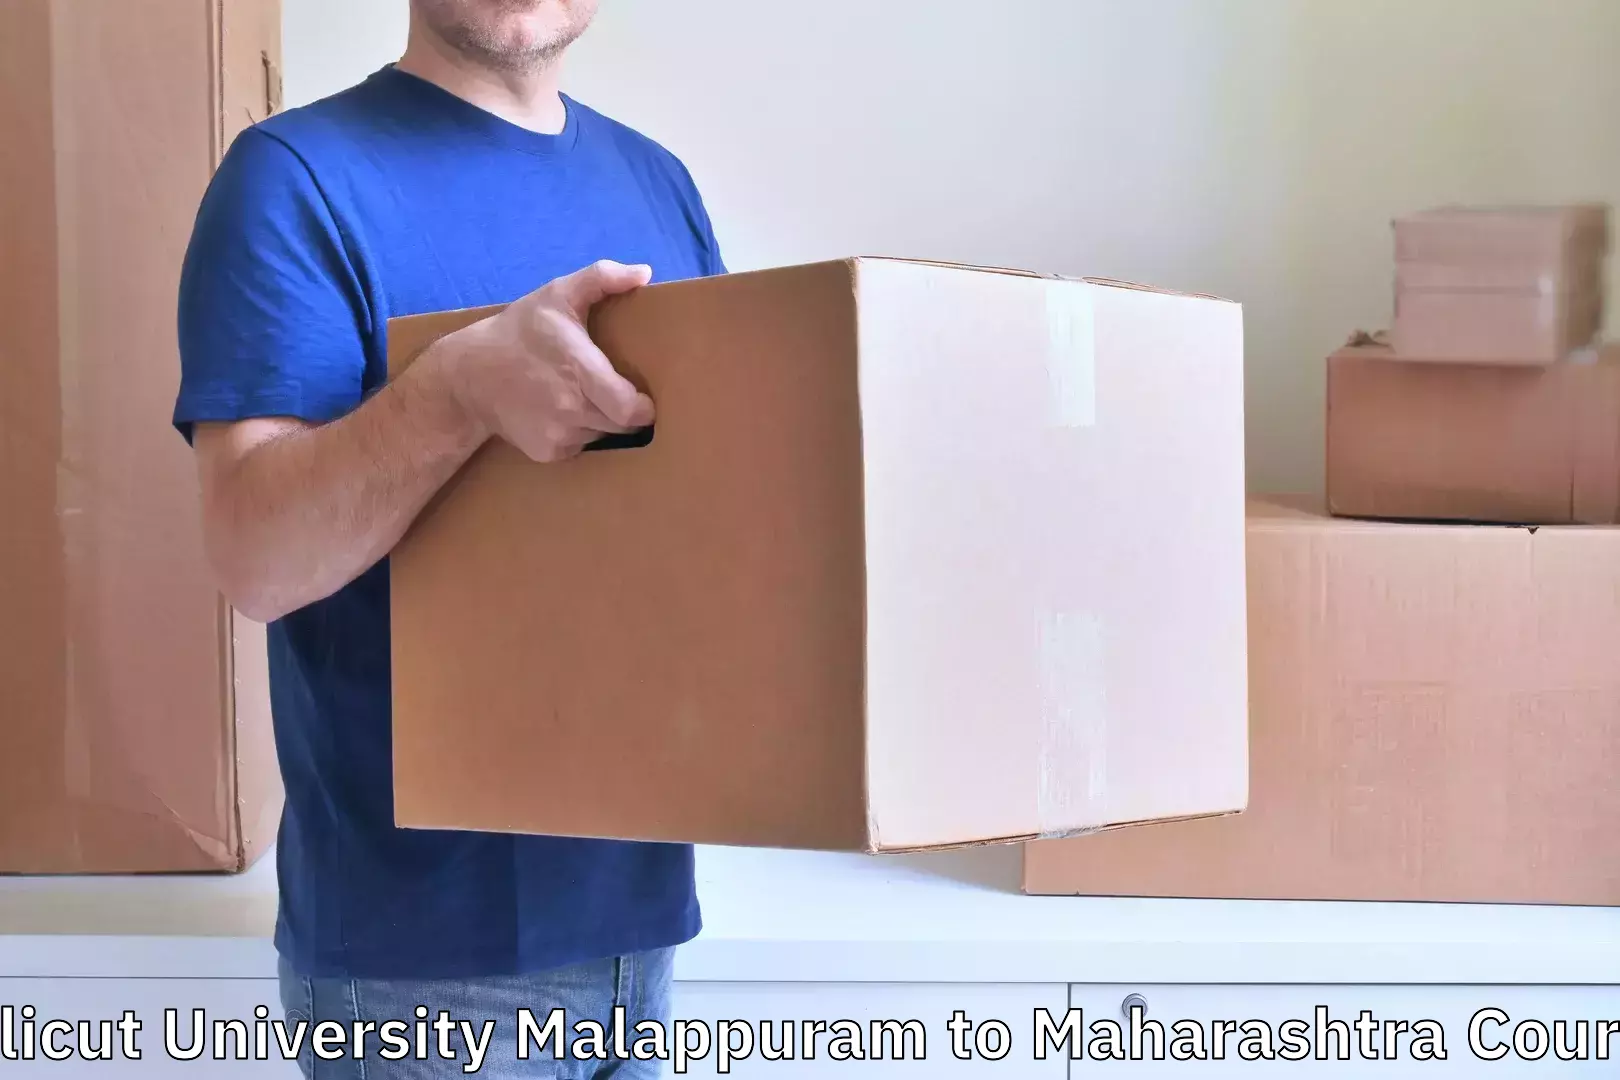 Baggage courier service Calicut University Malappuram to Ahmedpur